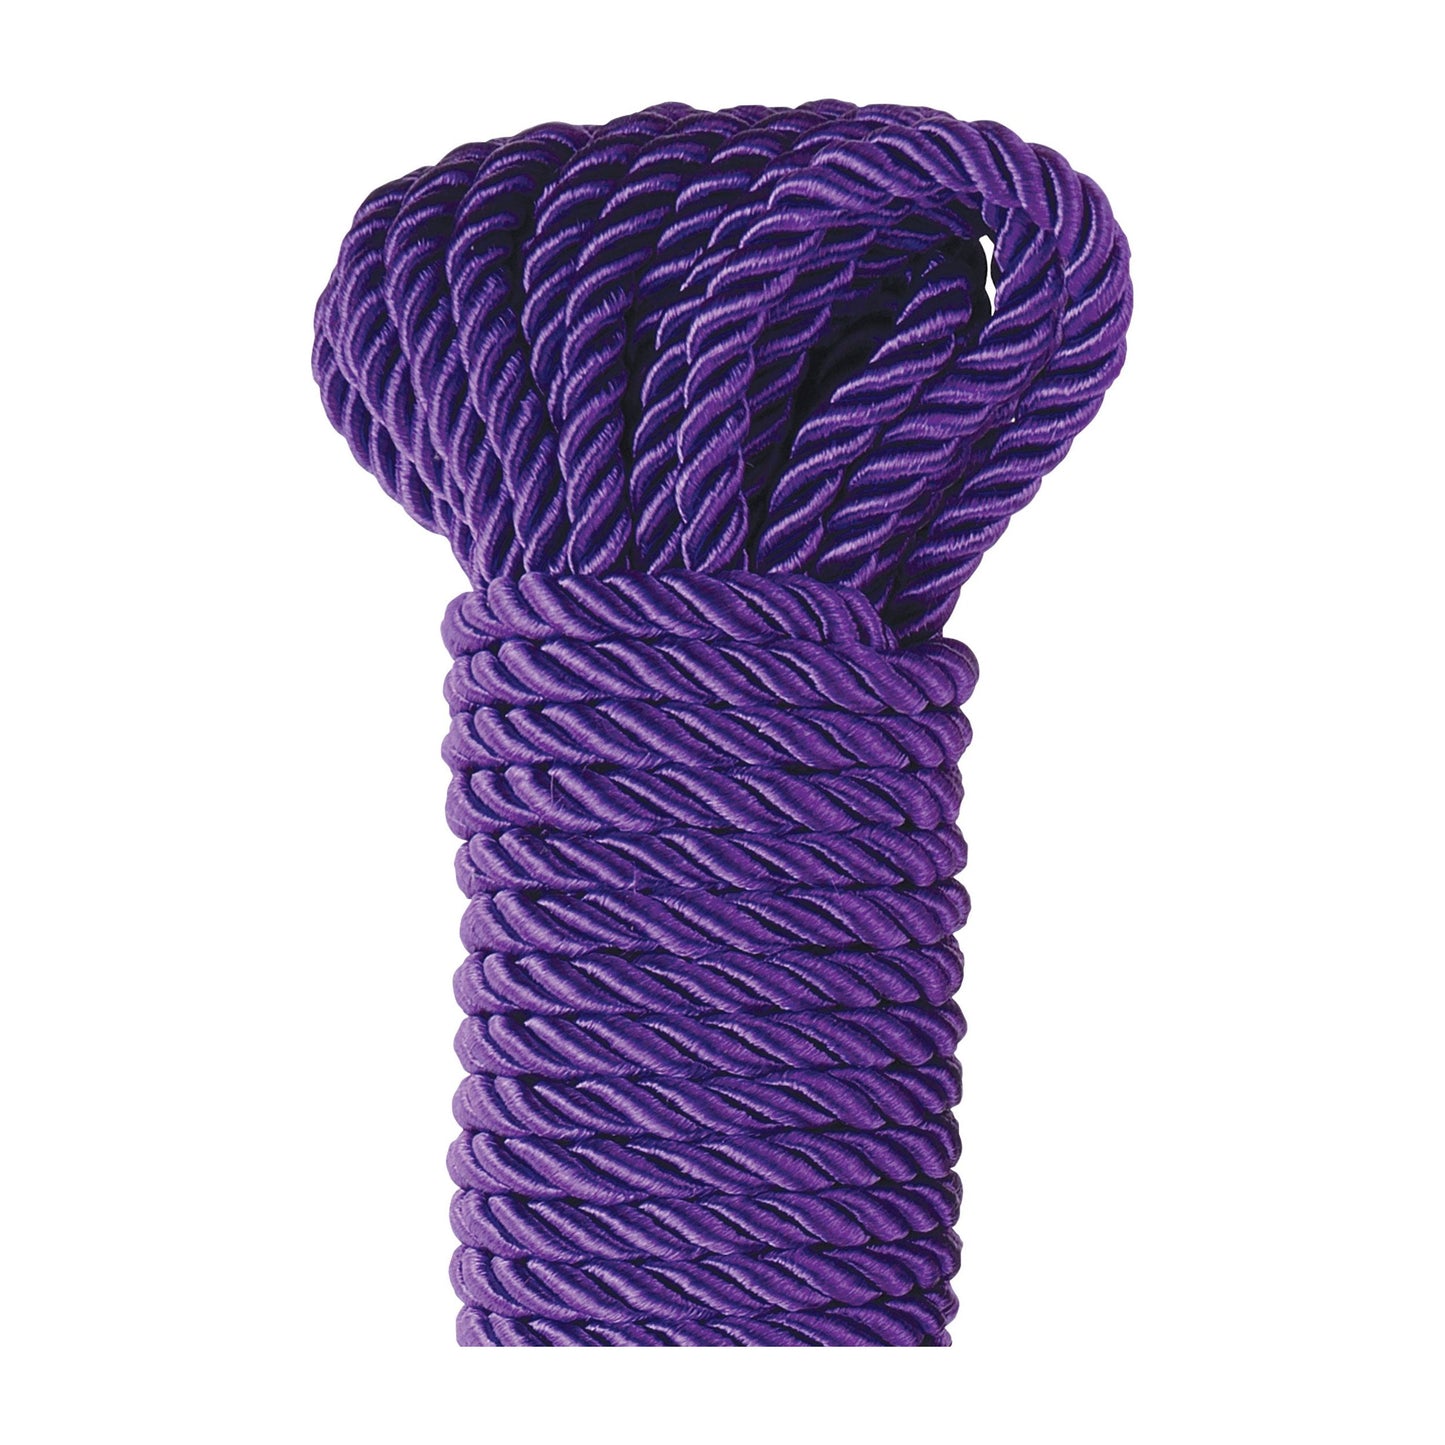 Fetish Fantasy Series Deluxe Silky Rope - Purple - Buy Bondage Rope Online - My Temptations